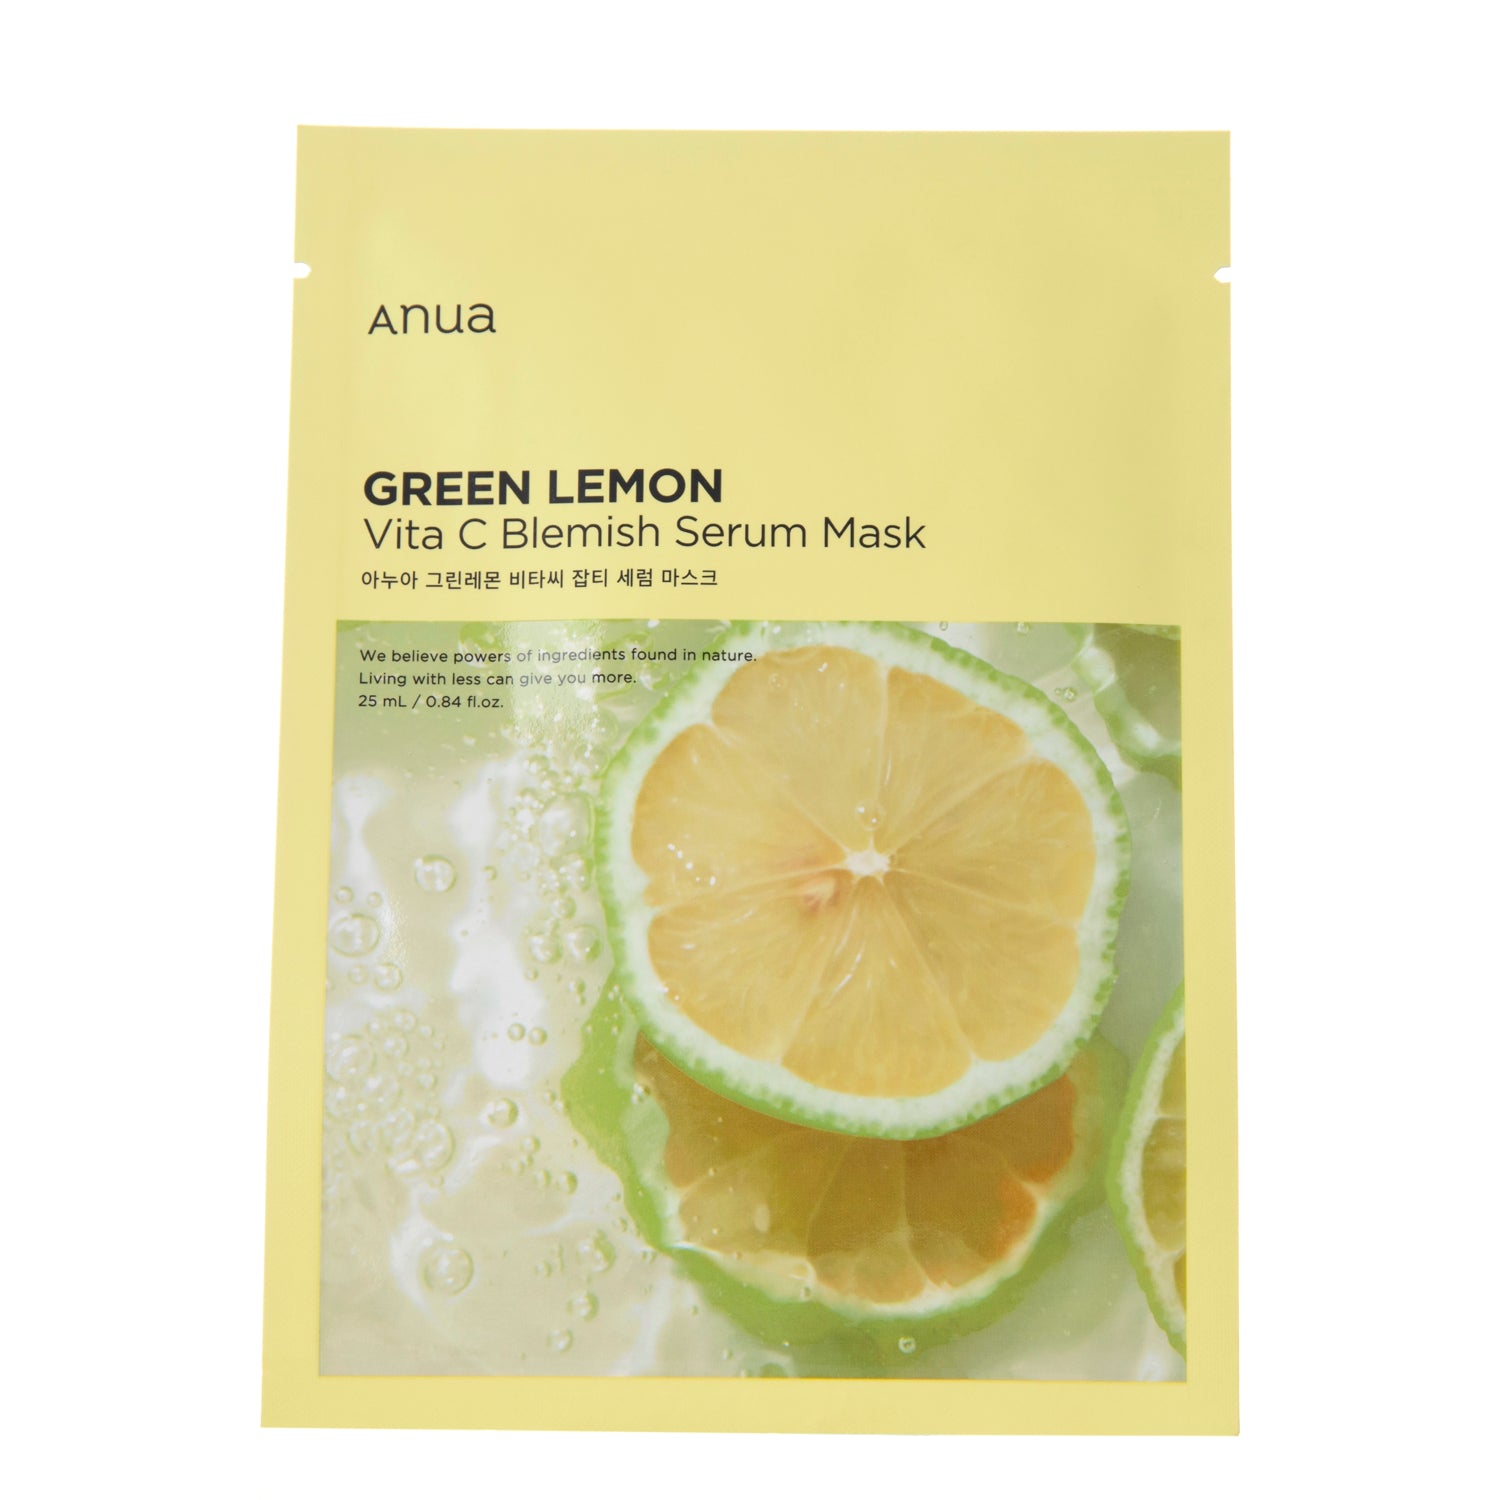 Anua - Green Lemon Vita C Blemish Serum Mask